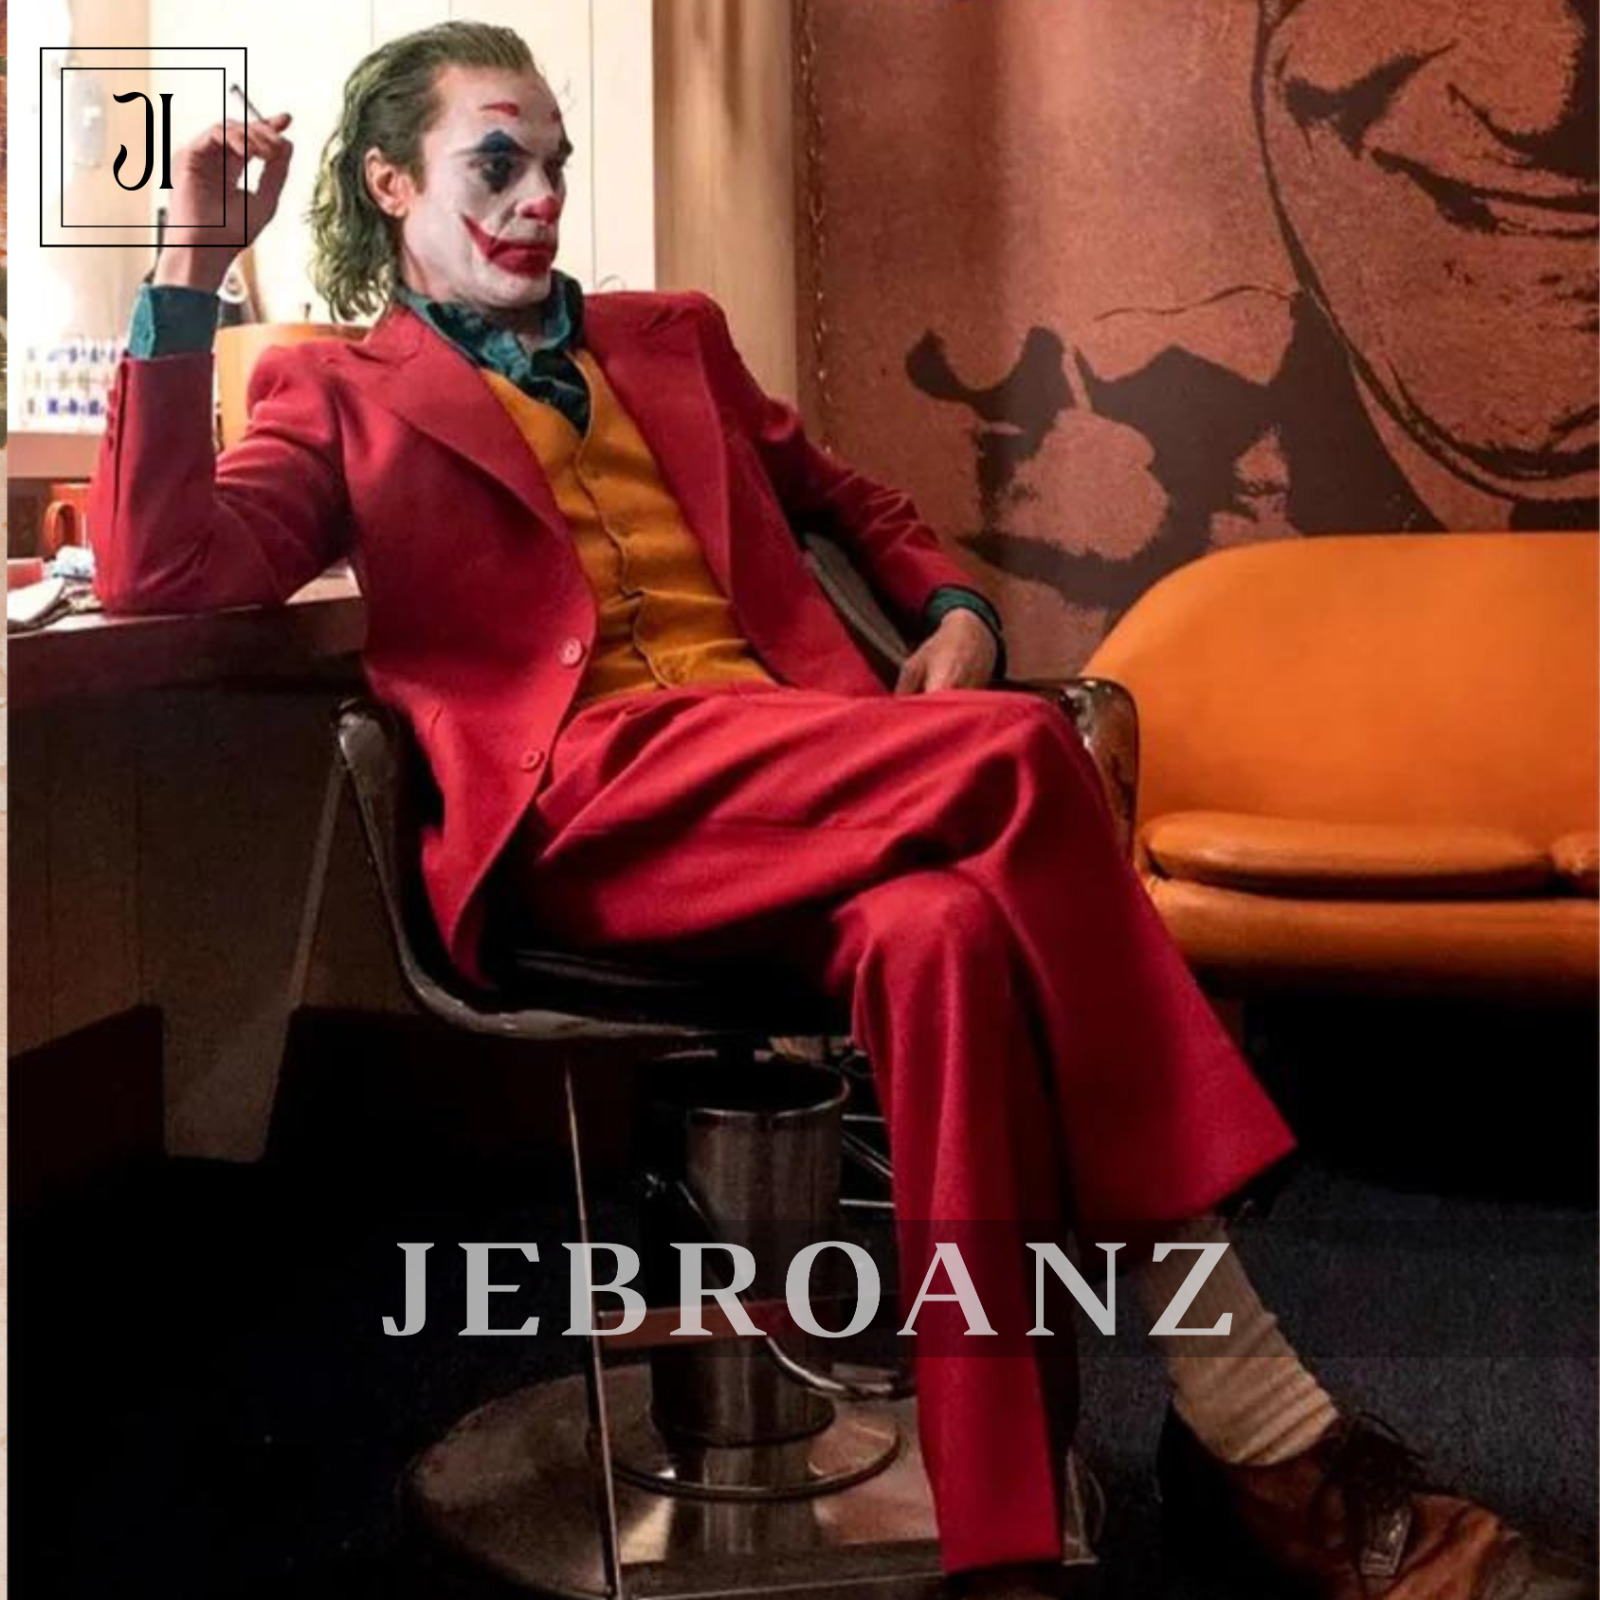 New Joker Costume for Halloween - Cosplay Costume - 3 pc Suit - Masquerade event